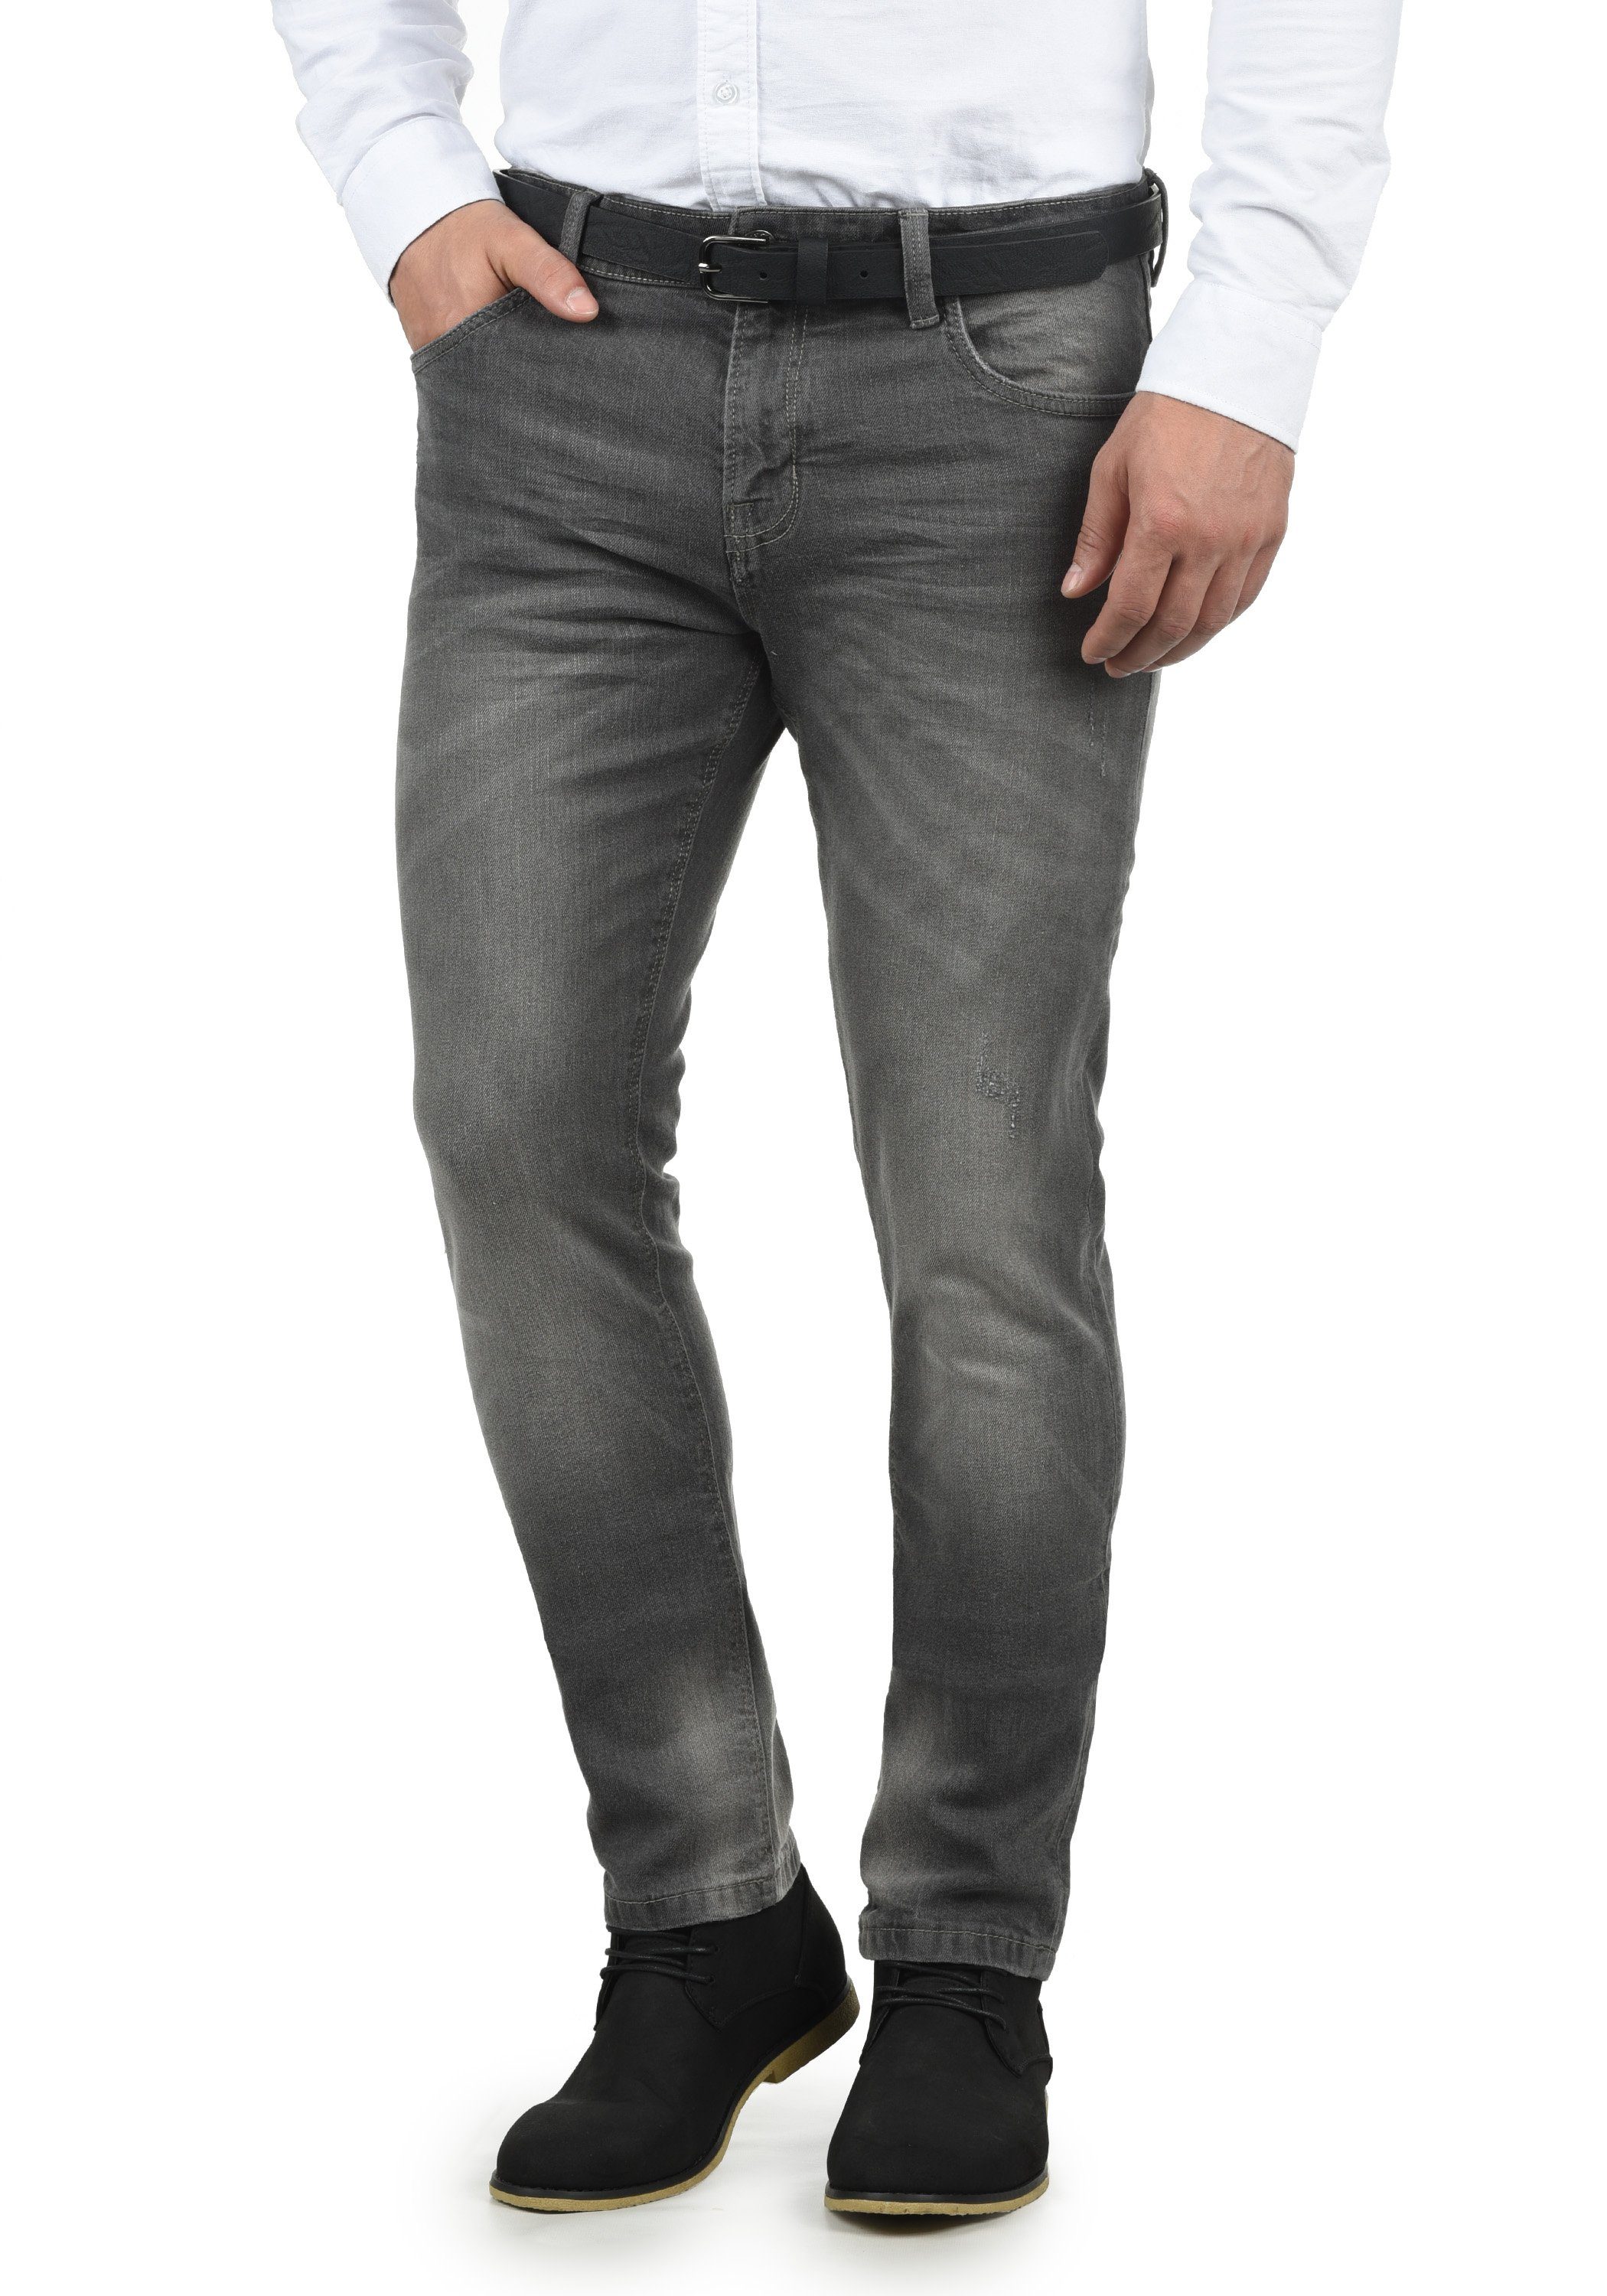 Indicode 5-Pocket-Jeans IDAldersgate Grey Light (901)